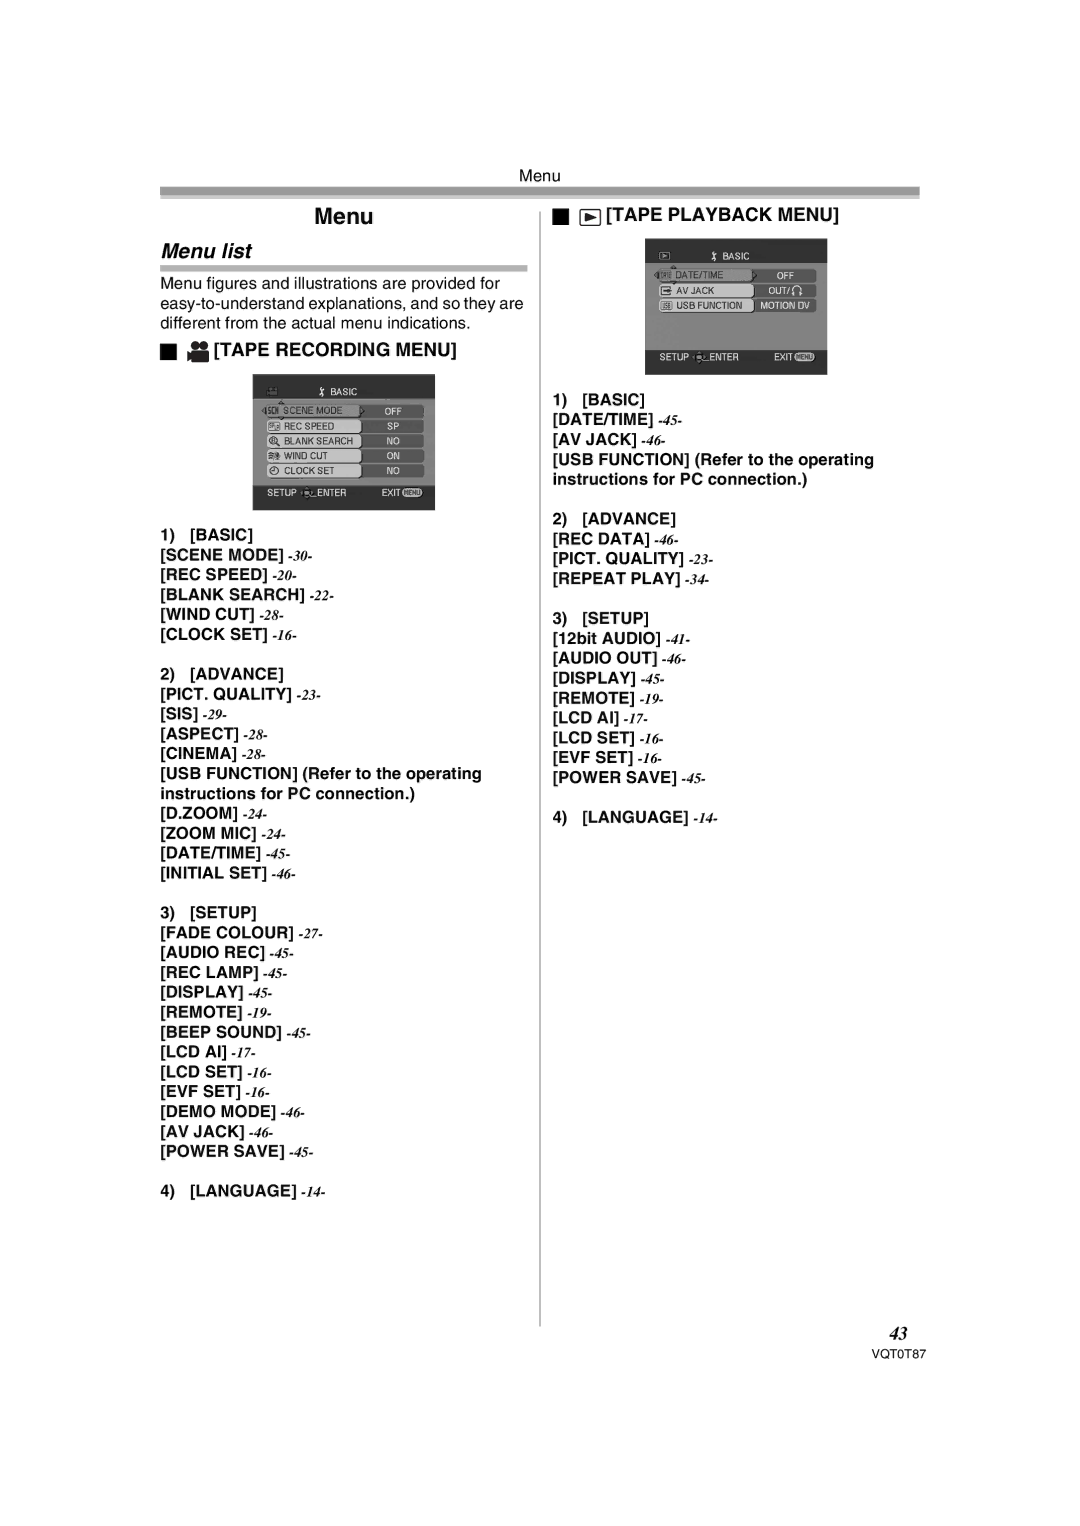 Panasonic NV-GS180EB operating instructions Menu list, Tape Recording Menu, Tape Playback Menu, Basic DATE/TIME -45-AV Jack 